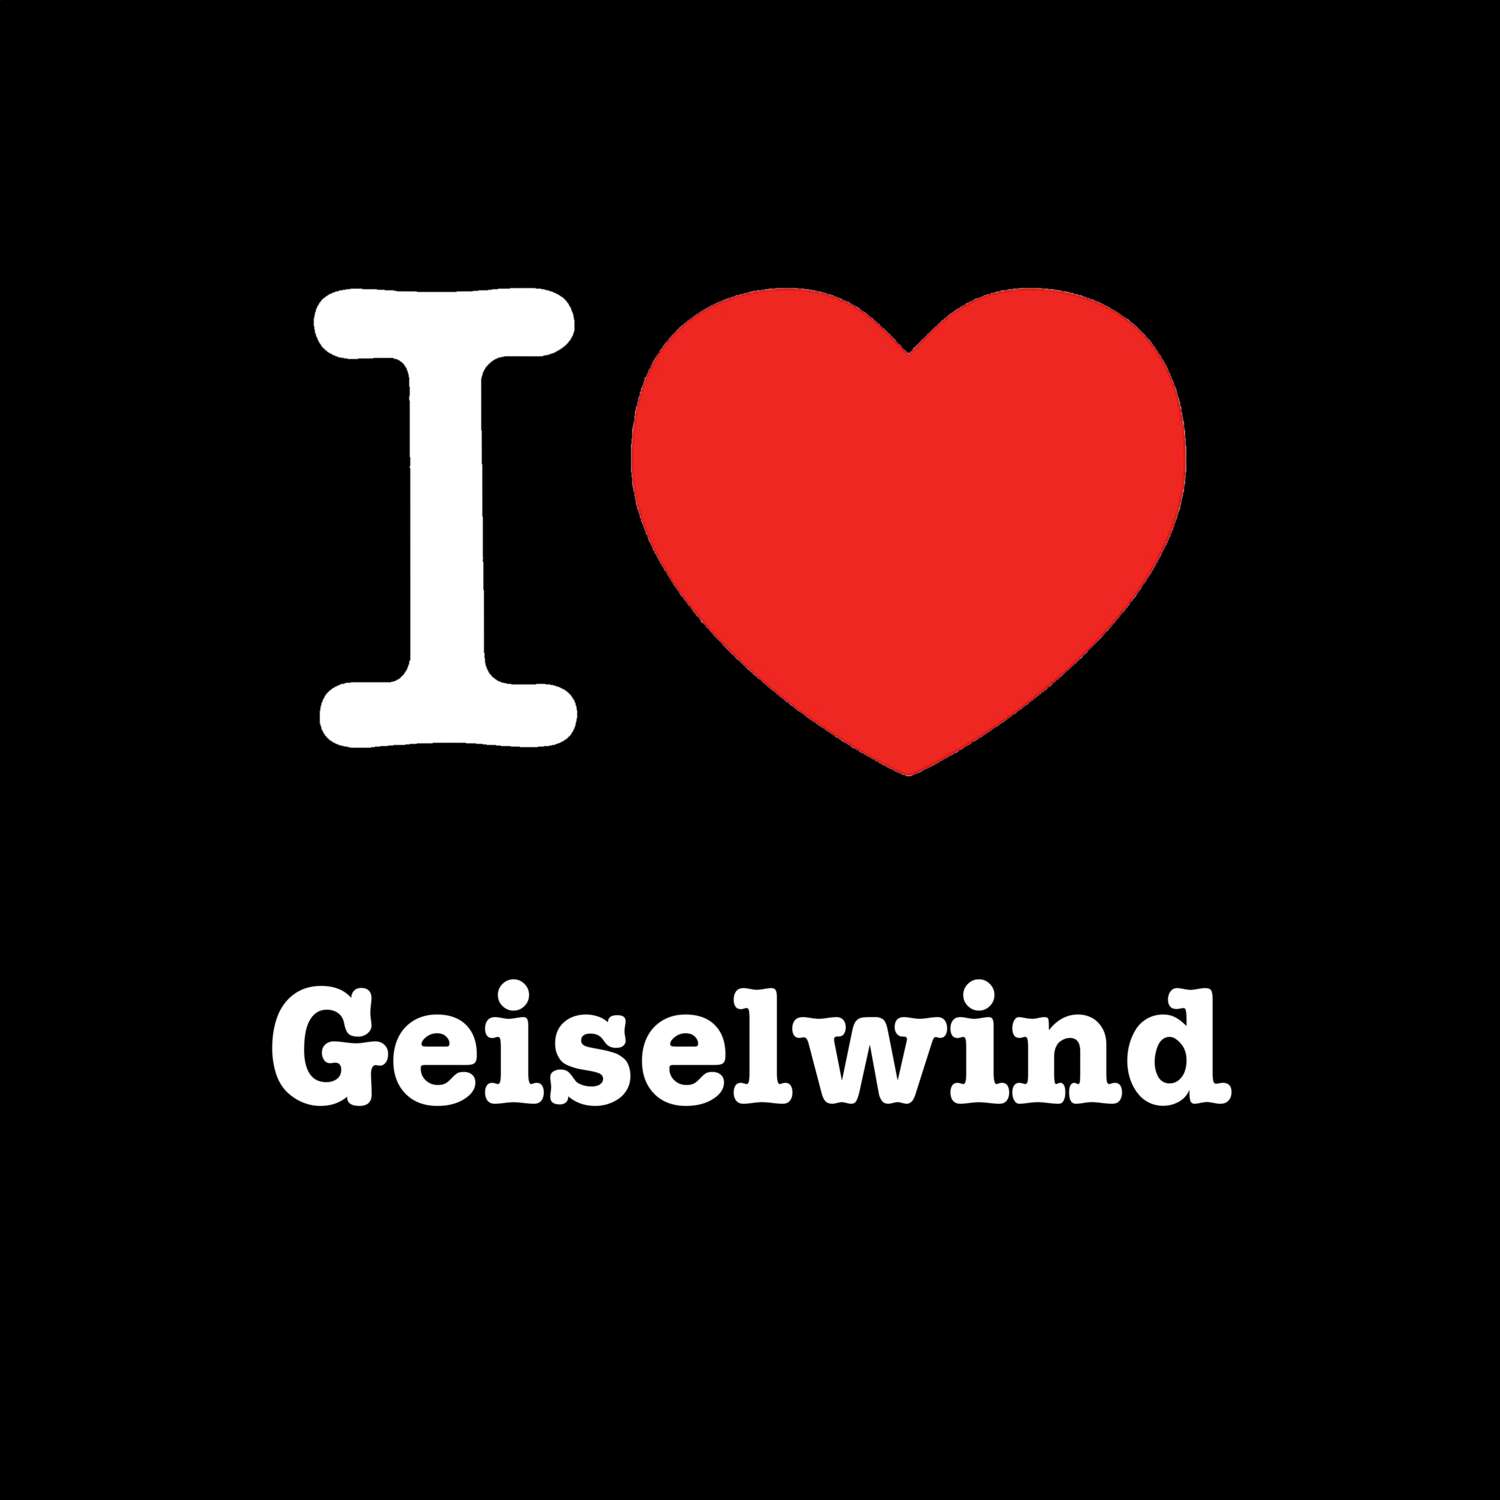 Geiselwind T-Shirt »I love«